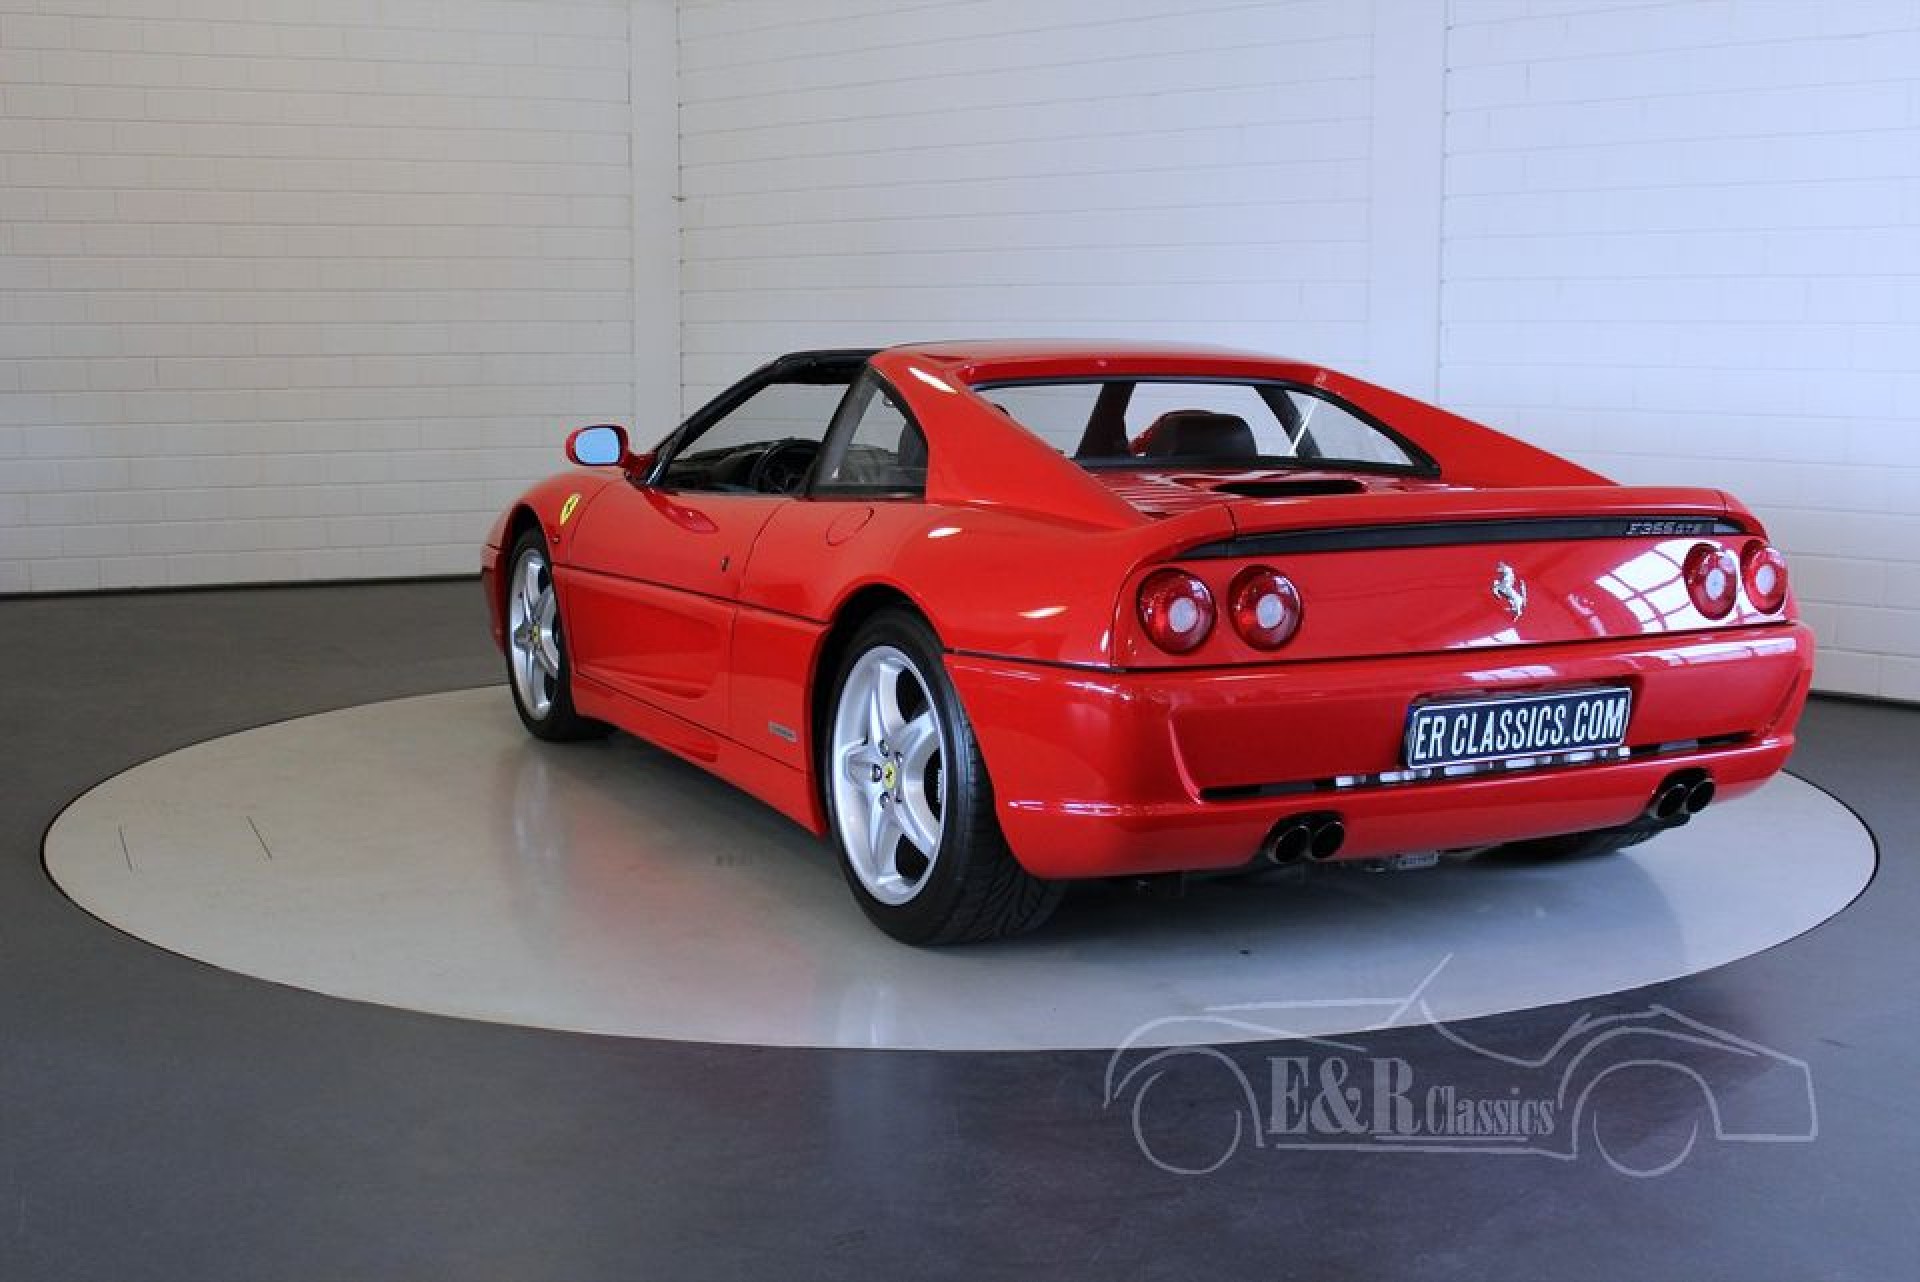 Ferrari F355 GTS Targa 1995 for sale at ERclassics